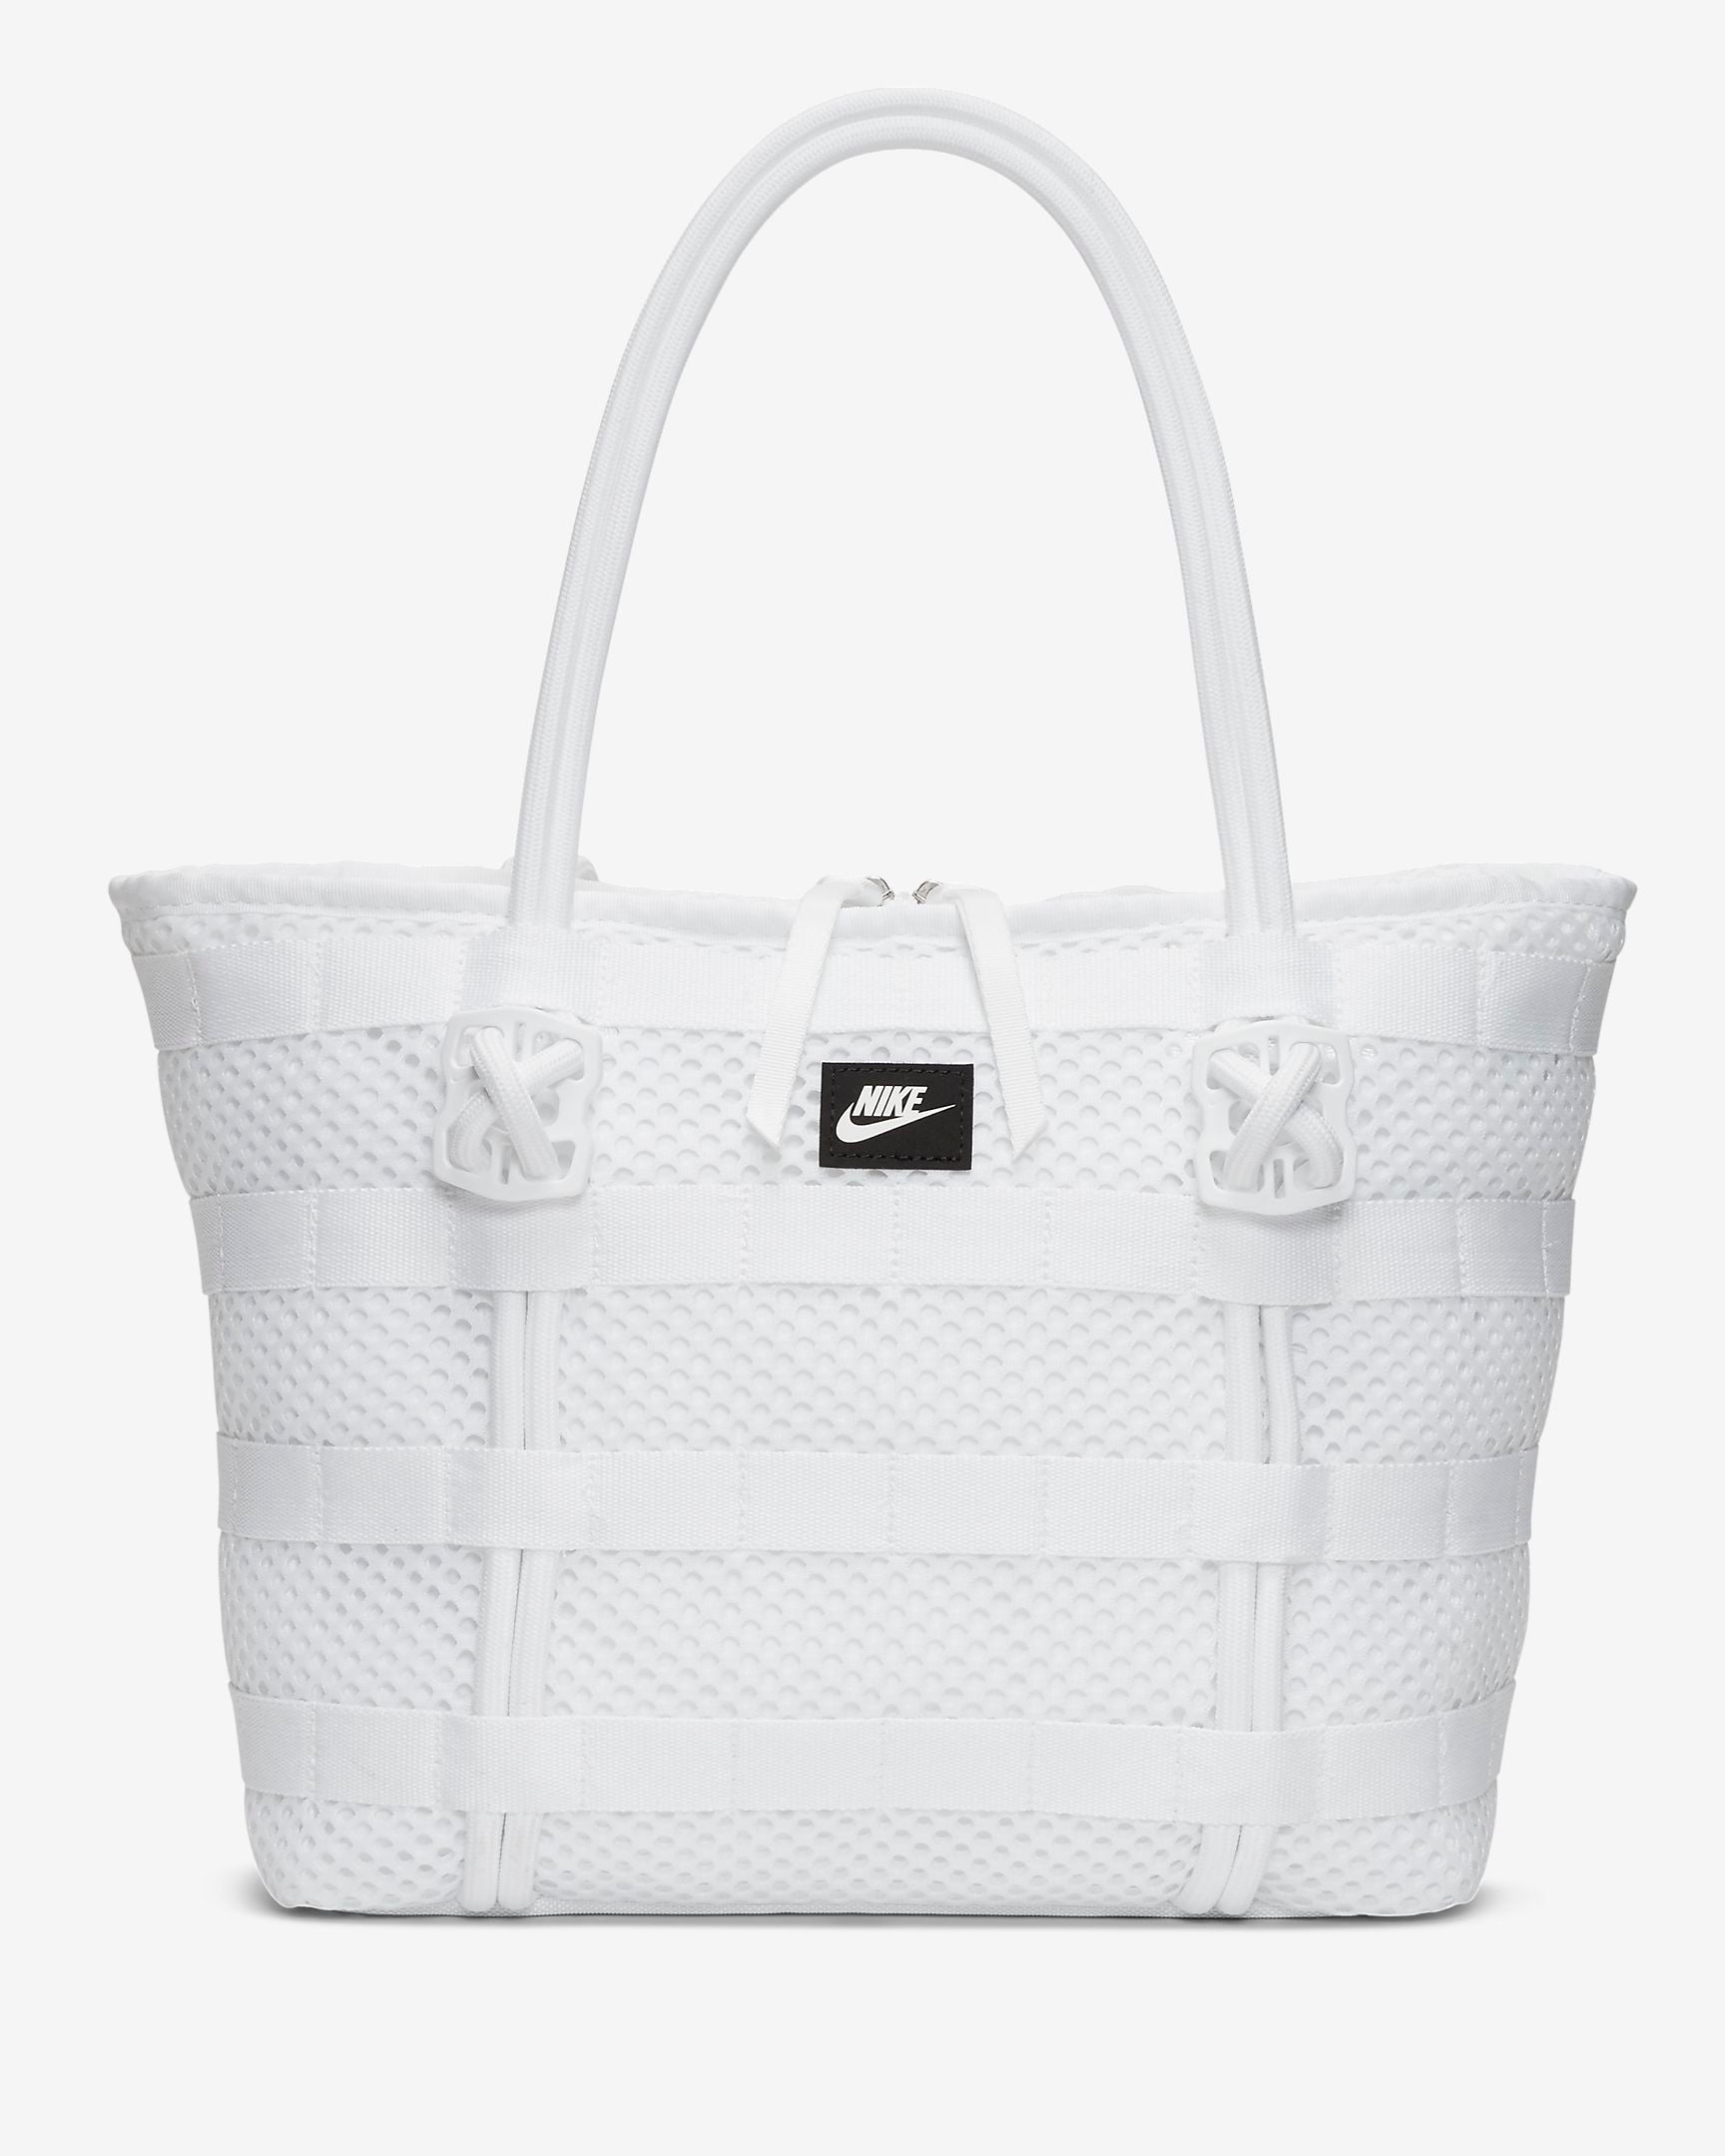 Nike, Bags, Nike Air Tote Bag Zipper Womens Black White Purse Dm90700